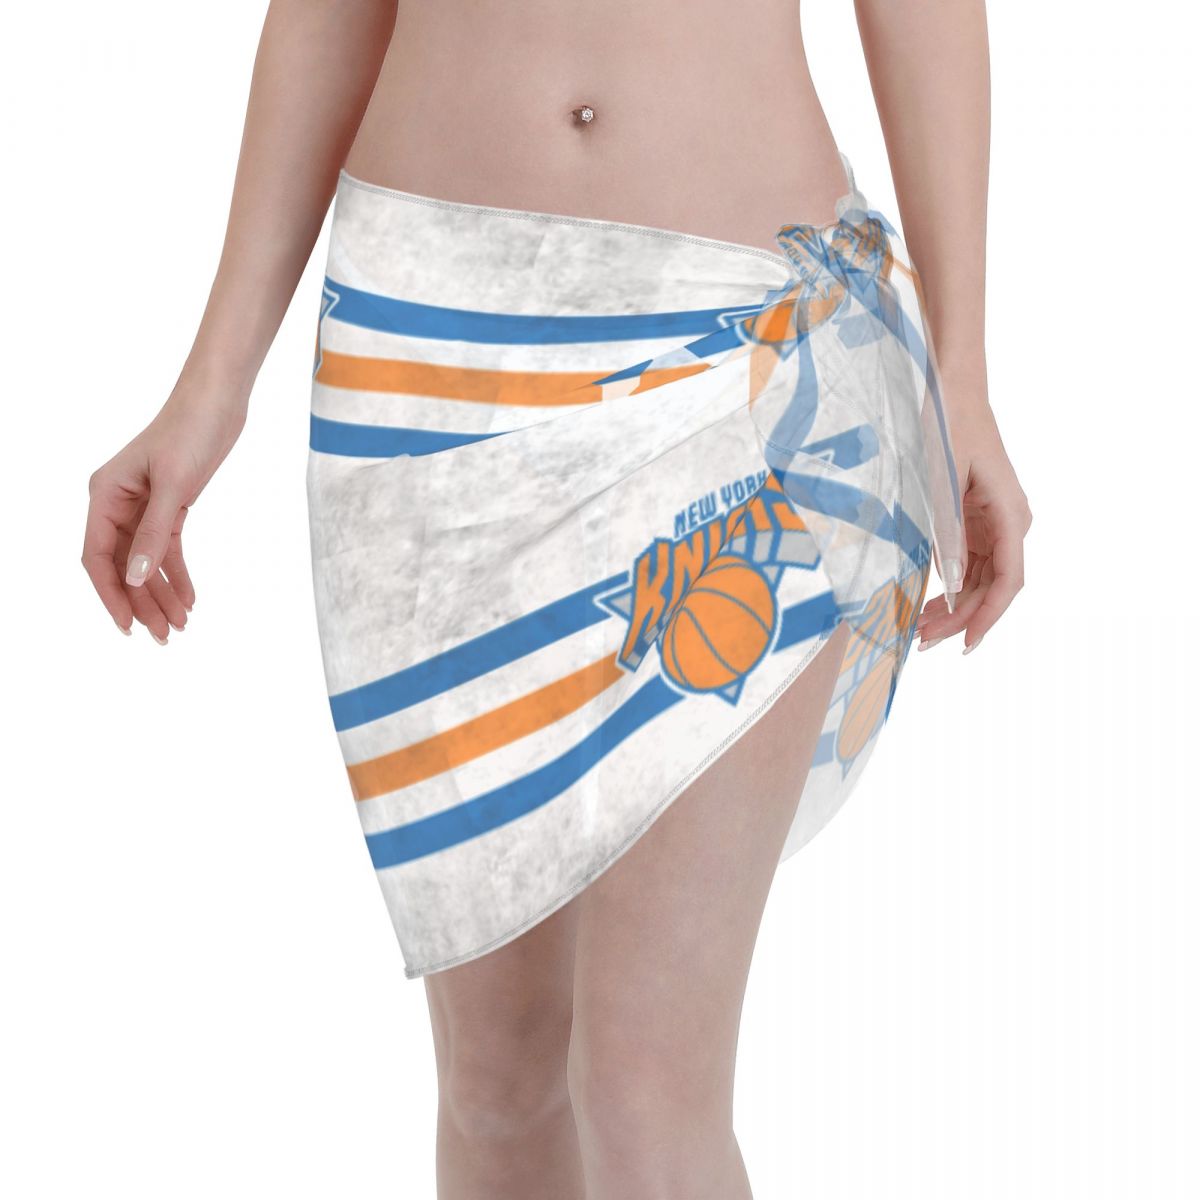 New York Knicks Basketball Club Women's Short Beach Sarong Cover Ups